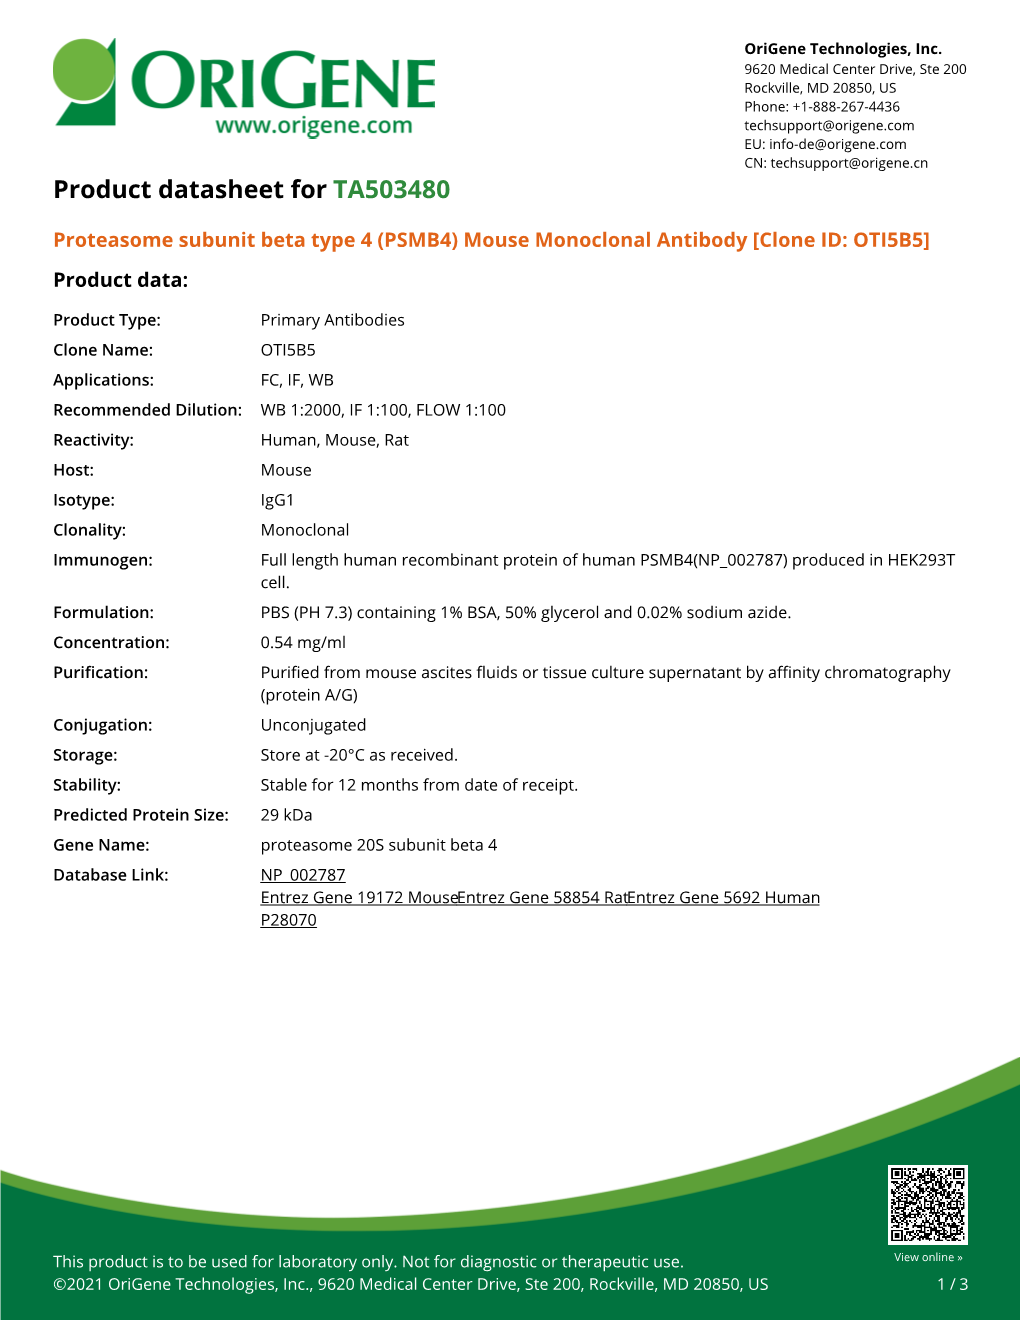 Proteasome Subunit Beta Type 4 (PSMB4) Mouse Monoclonal Antibody [Clone ID: OTI5B5] Product Data